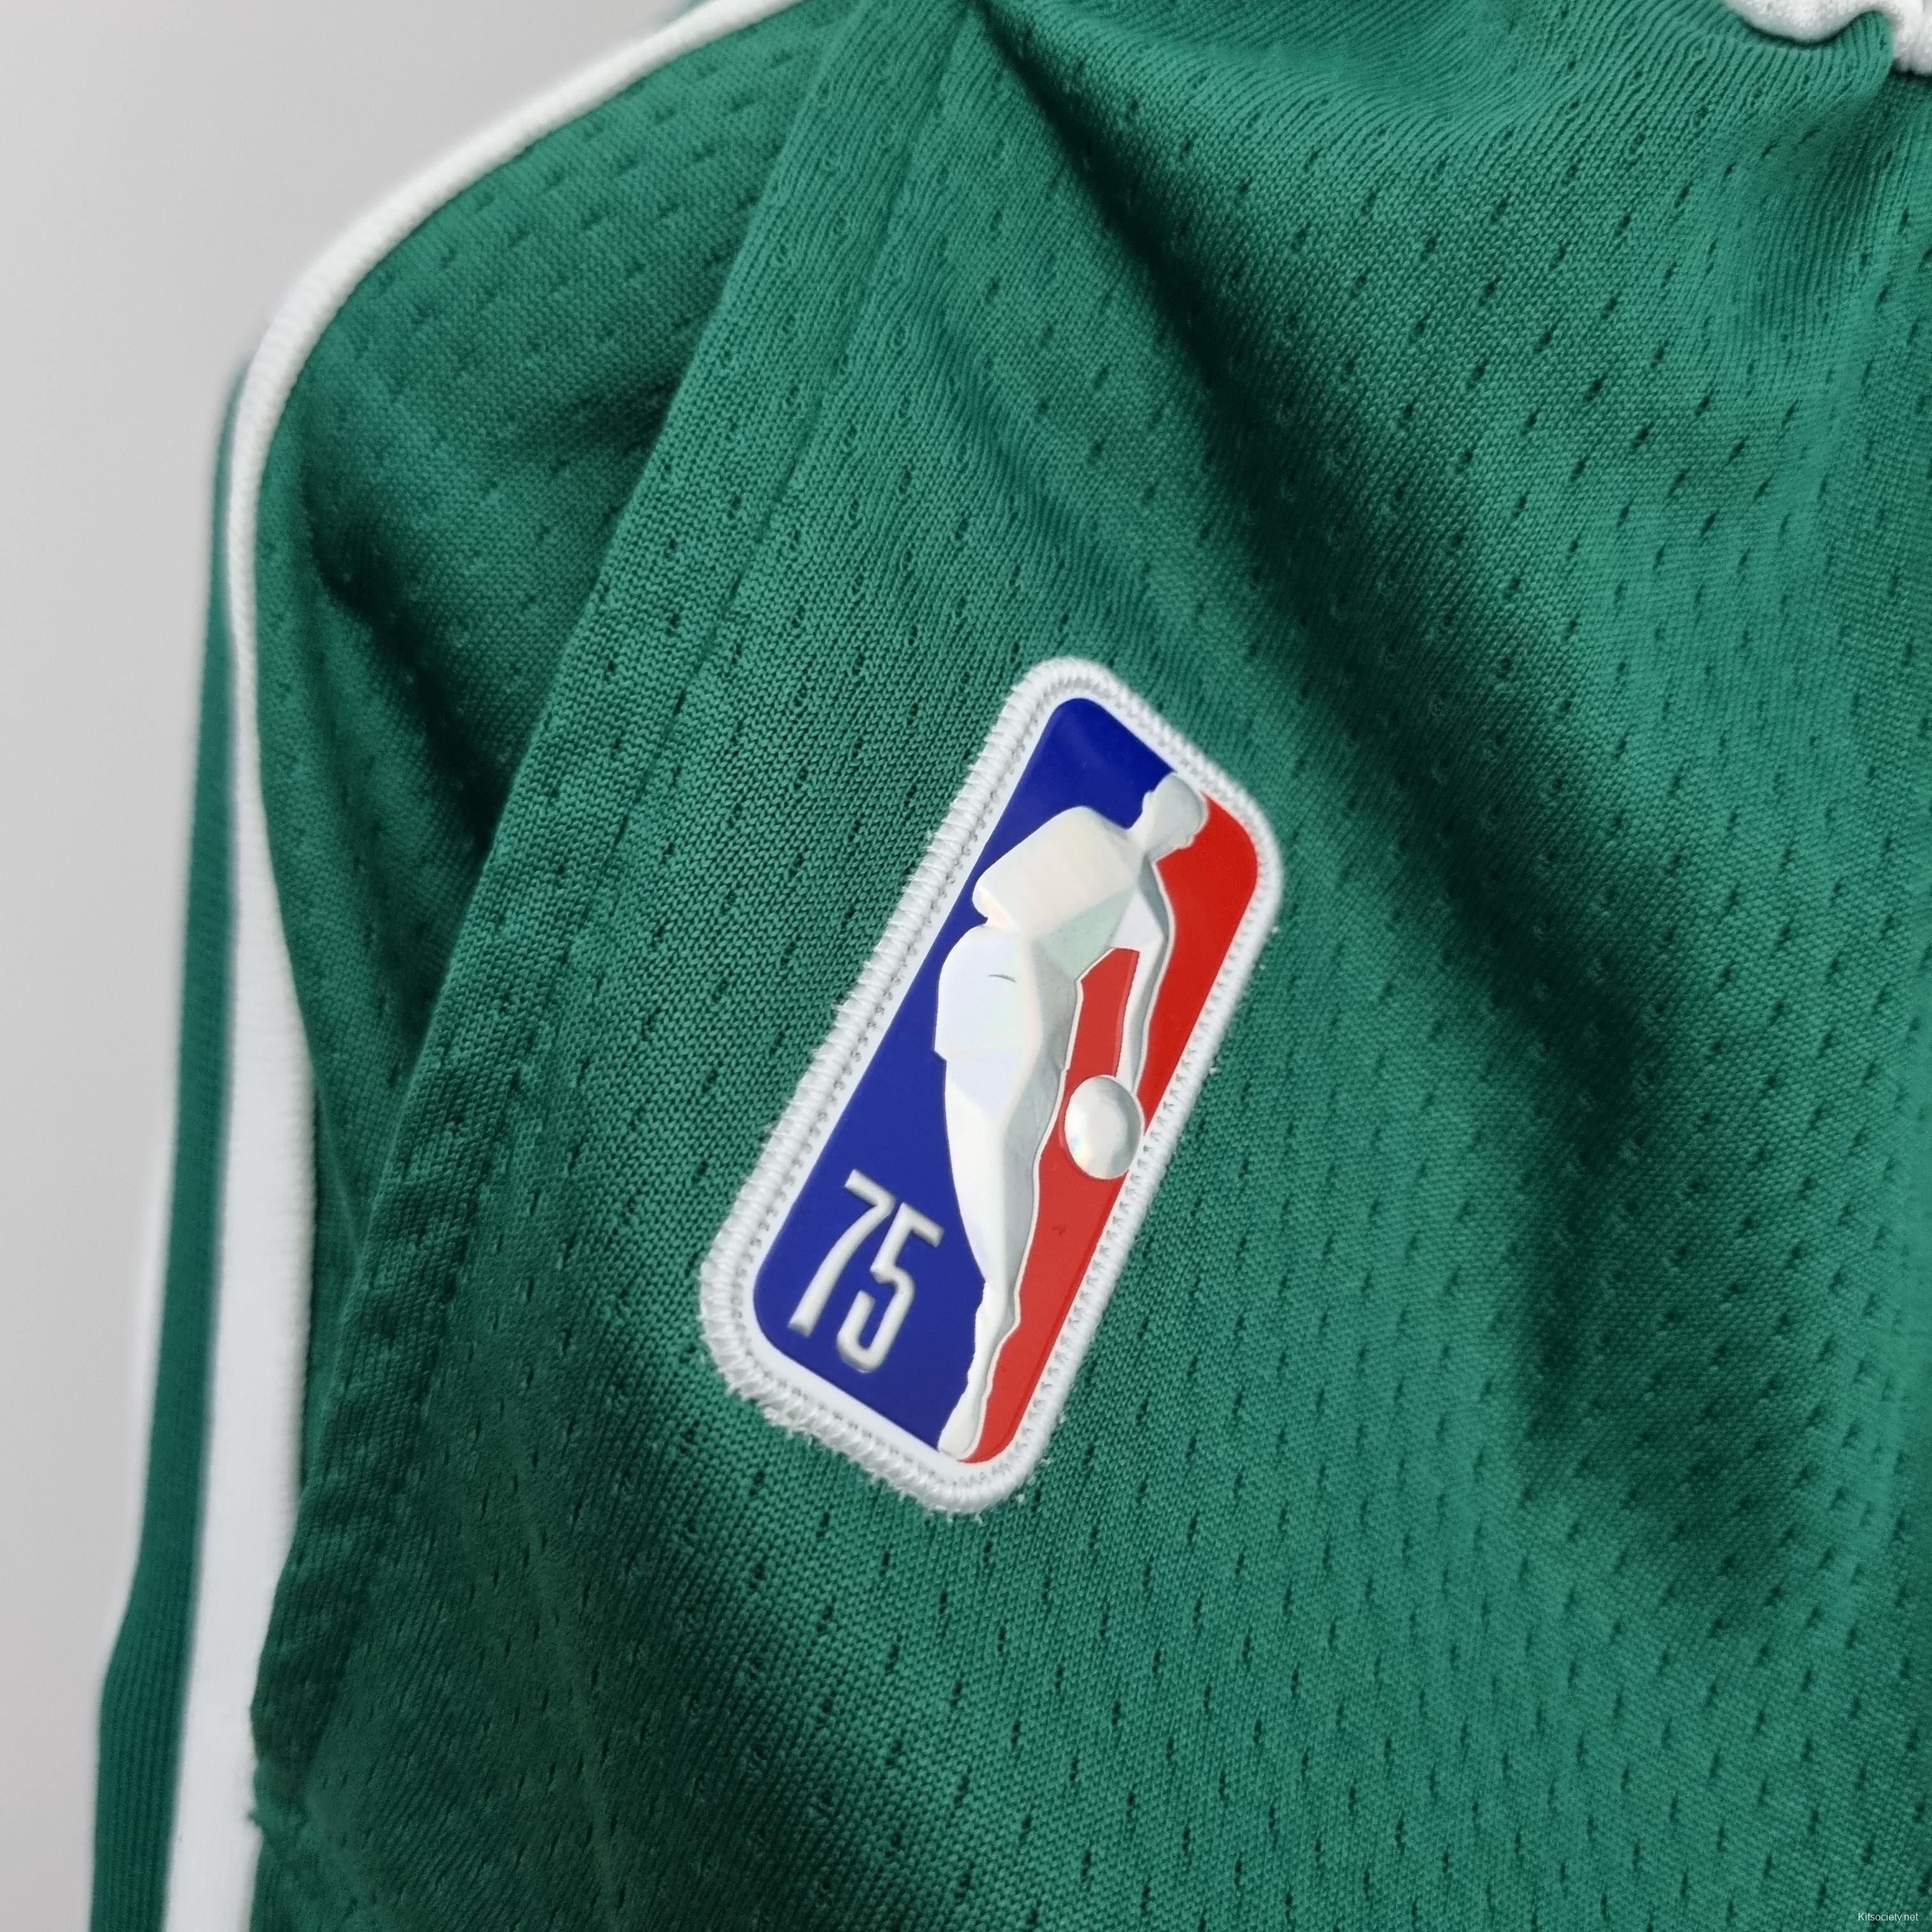 Blank Boston Celtics Practice Jerseys, Celtics Green & White